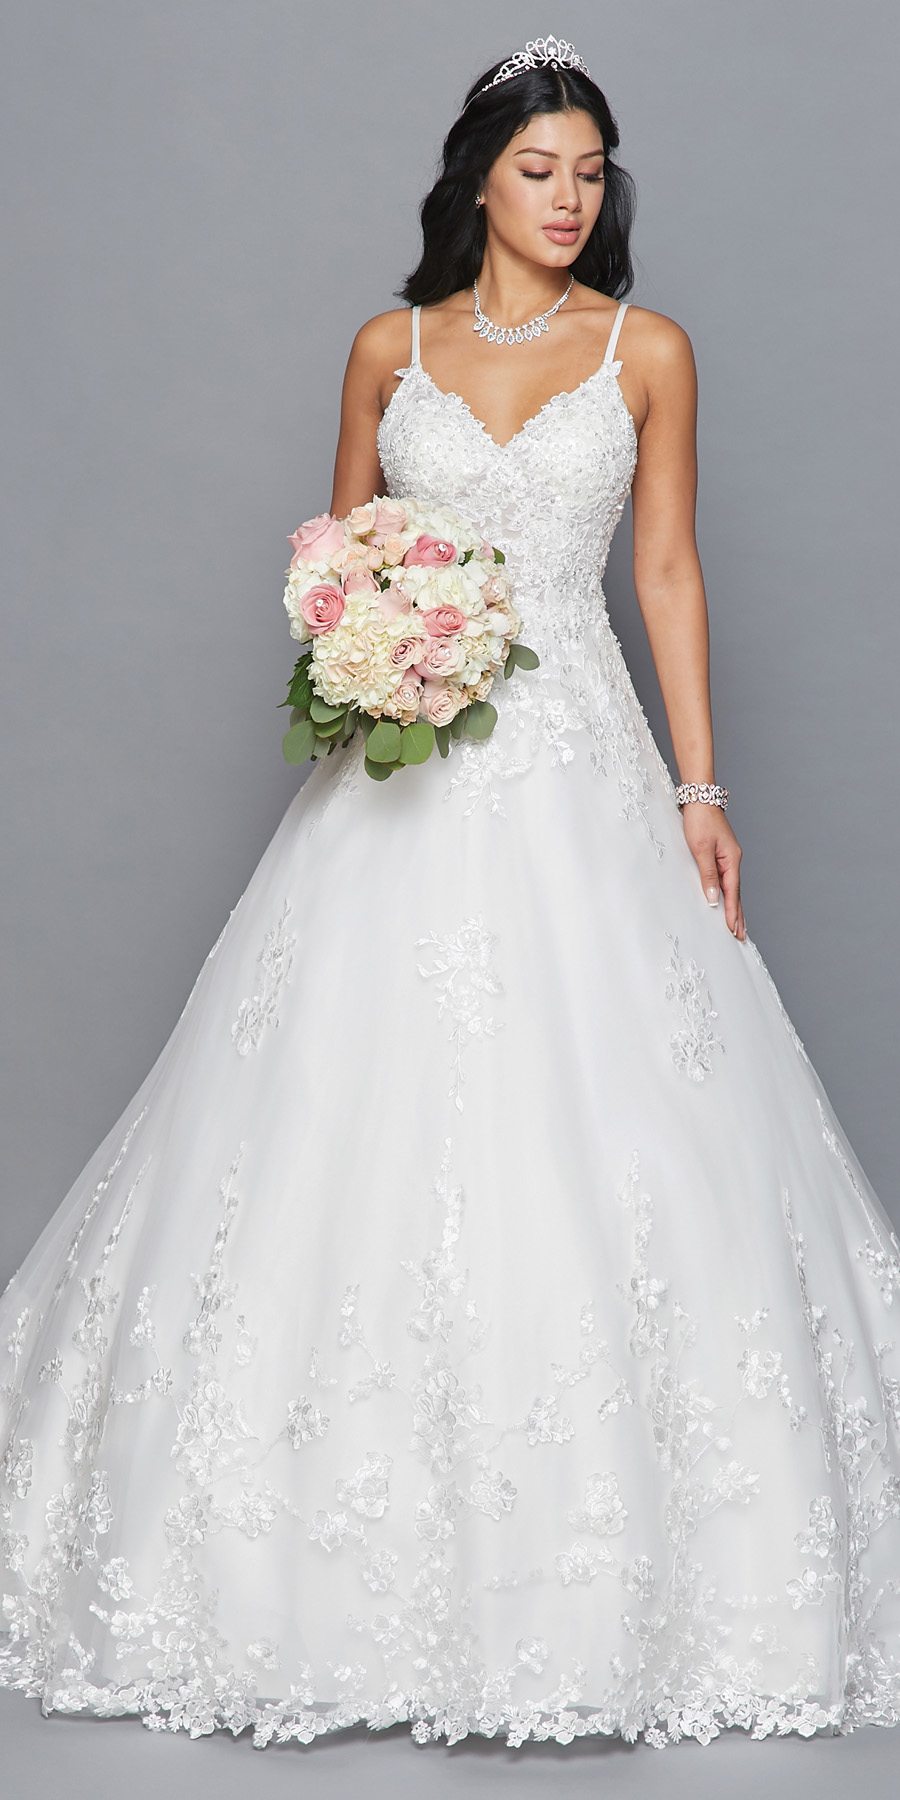 DeKlaire Bridal 417 Spaghetti Straps V-Neckline Open Back A-Line Wedding Dress With Beaded Embroidery Applique